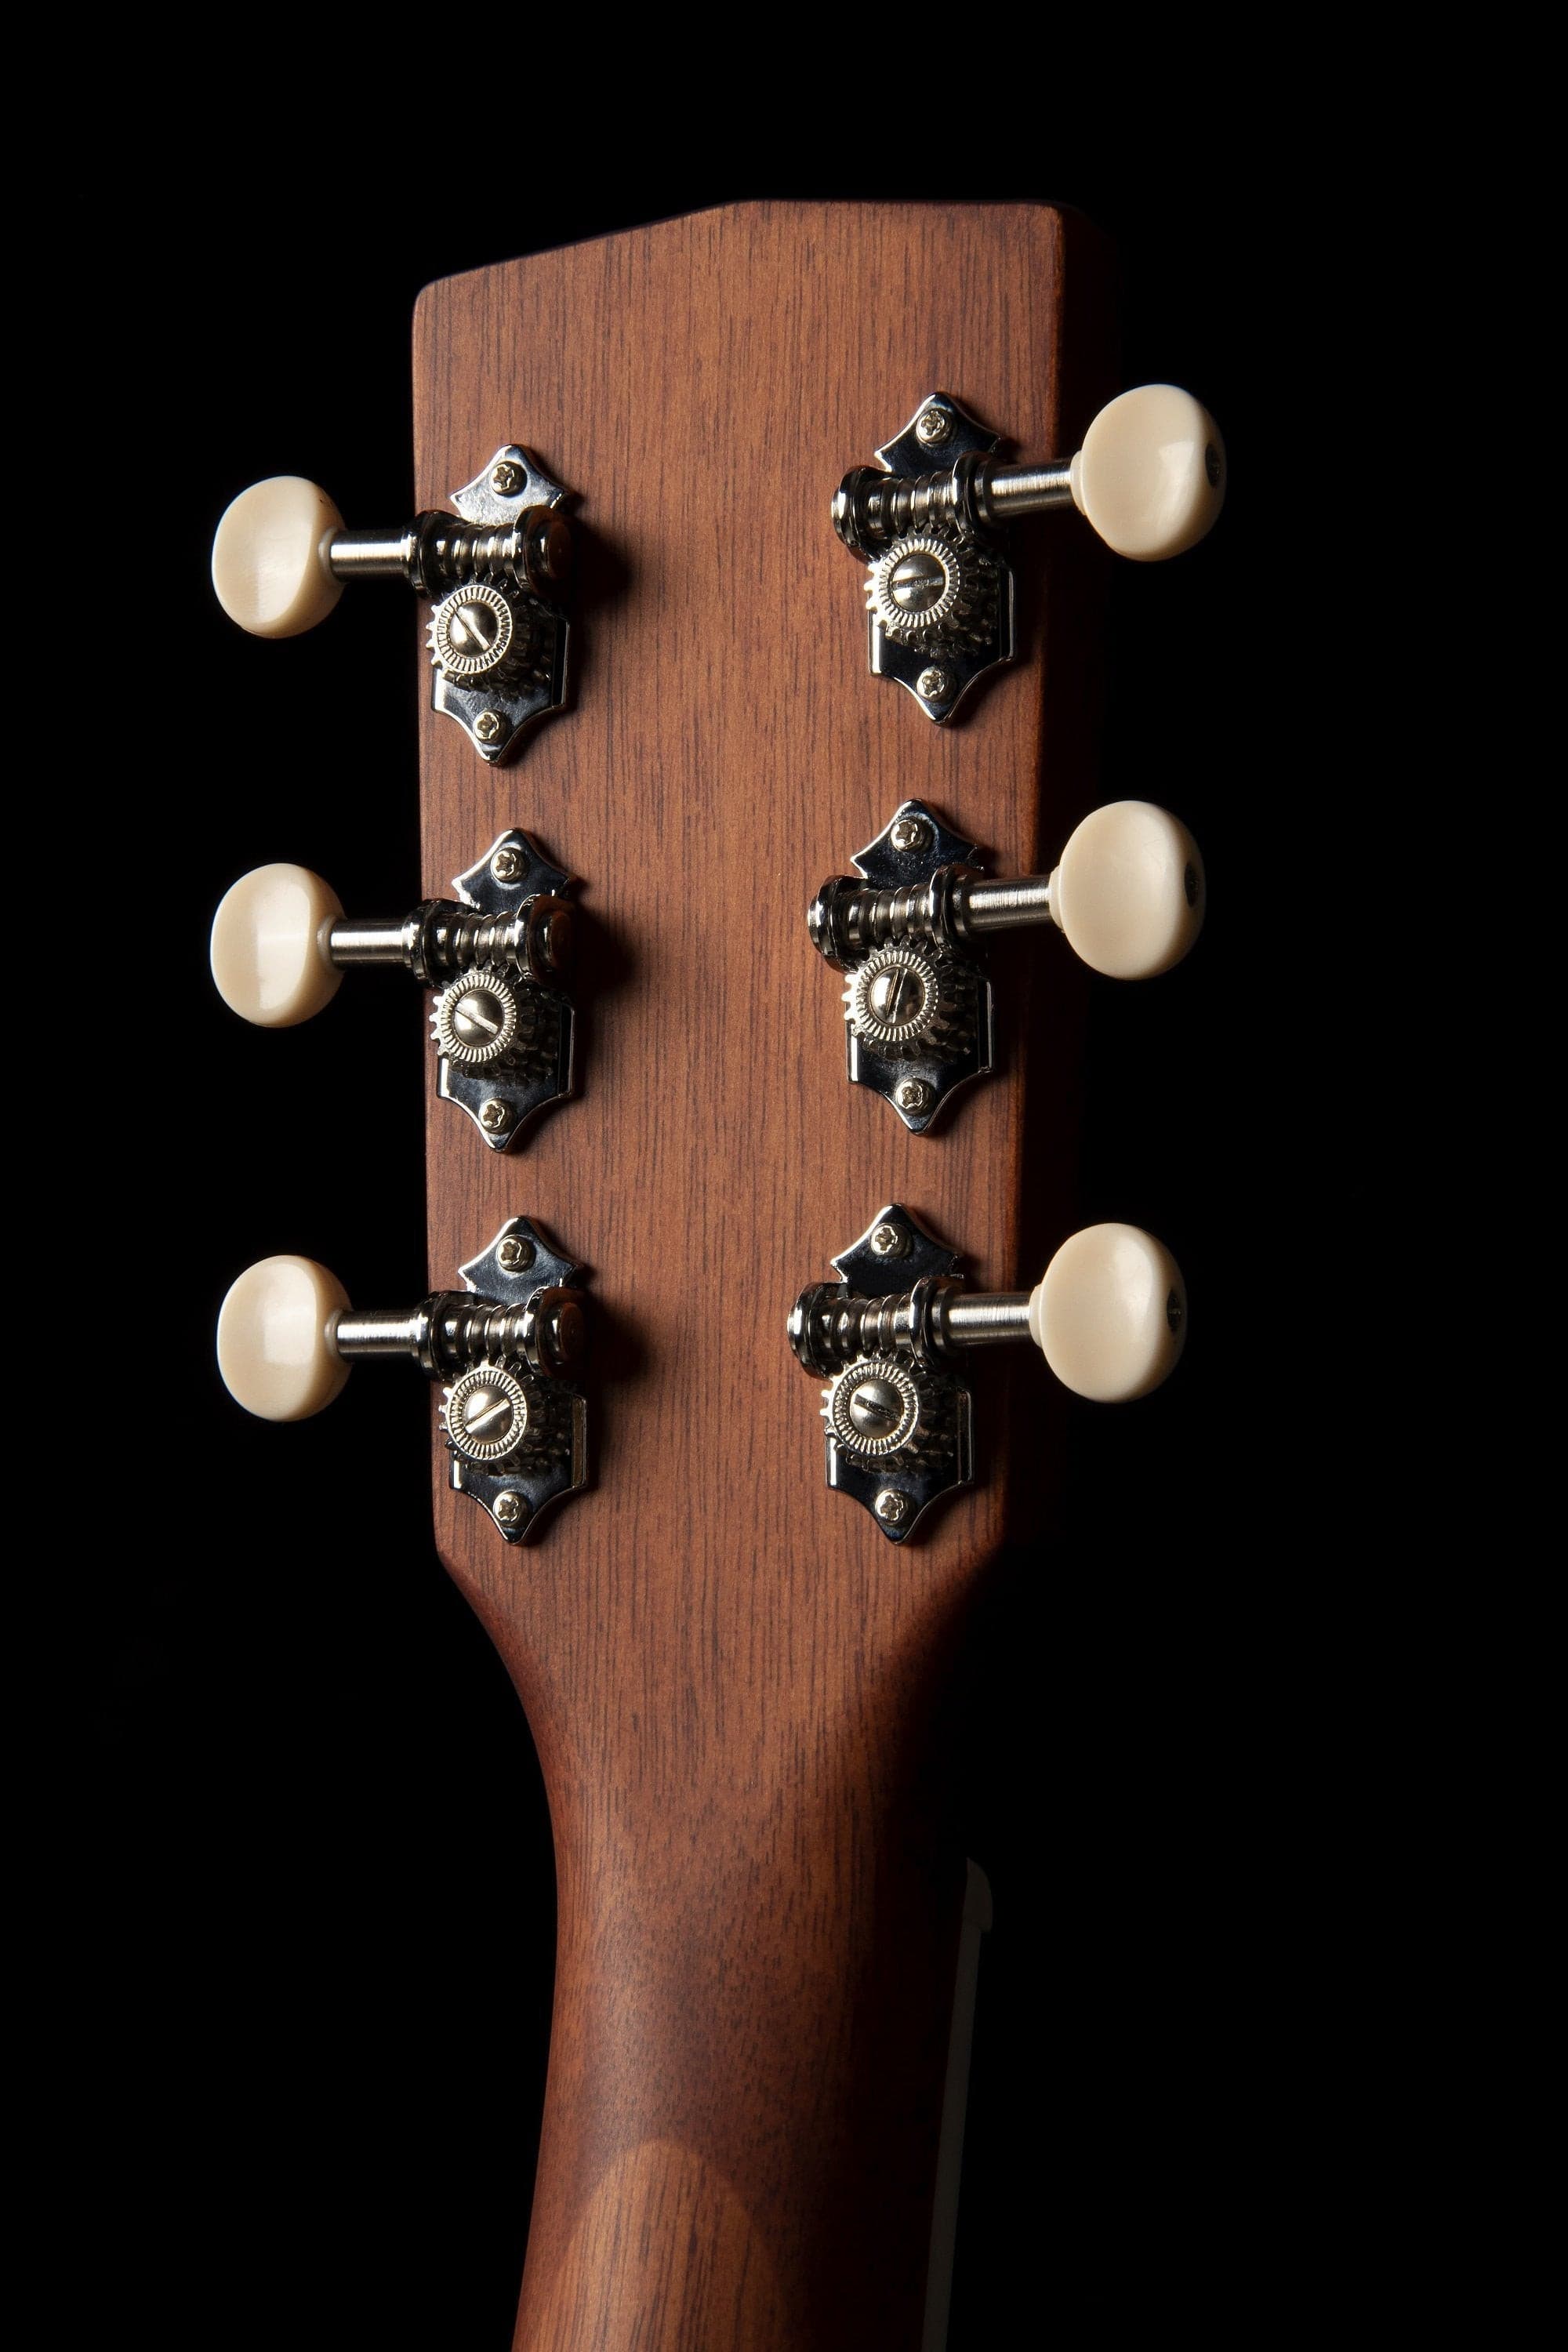 Cort CJ Retro Vintage Black Matte, Acoustic Guitar for sale at Richards Guitars.